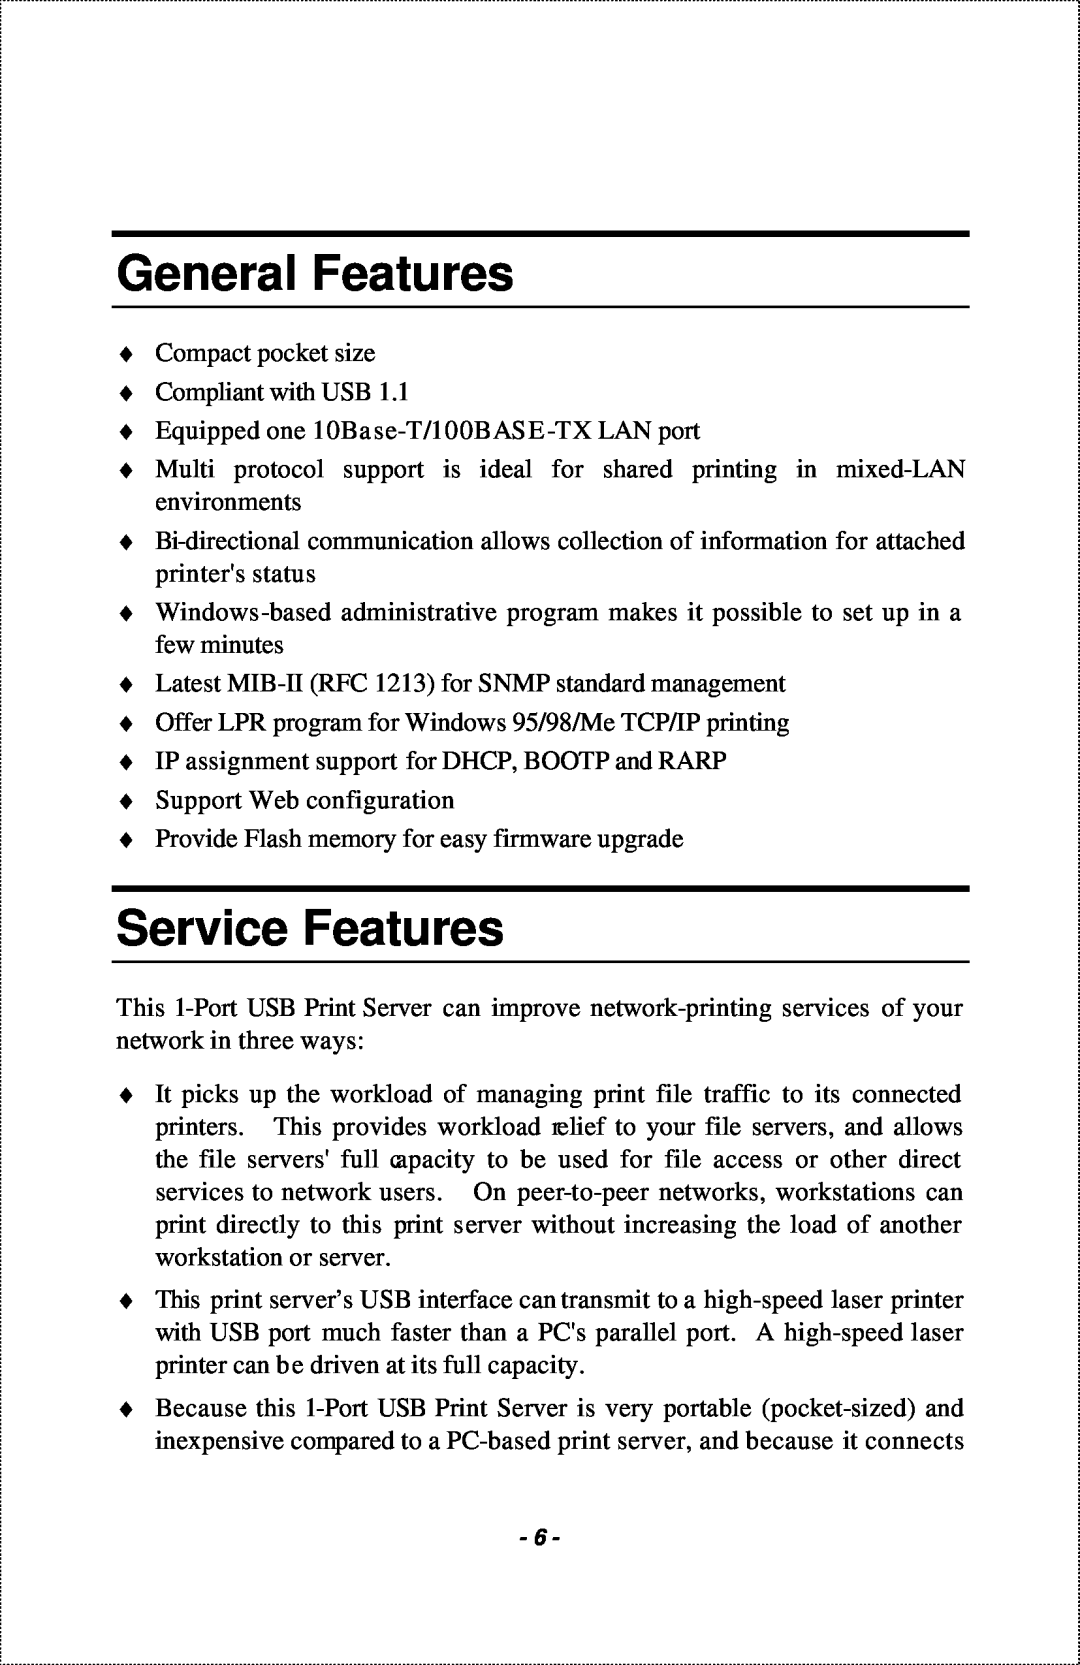 IBM 1-Port USB Print Server manual General Features, Service Features 